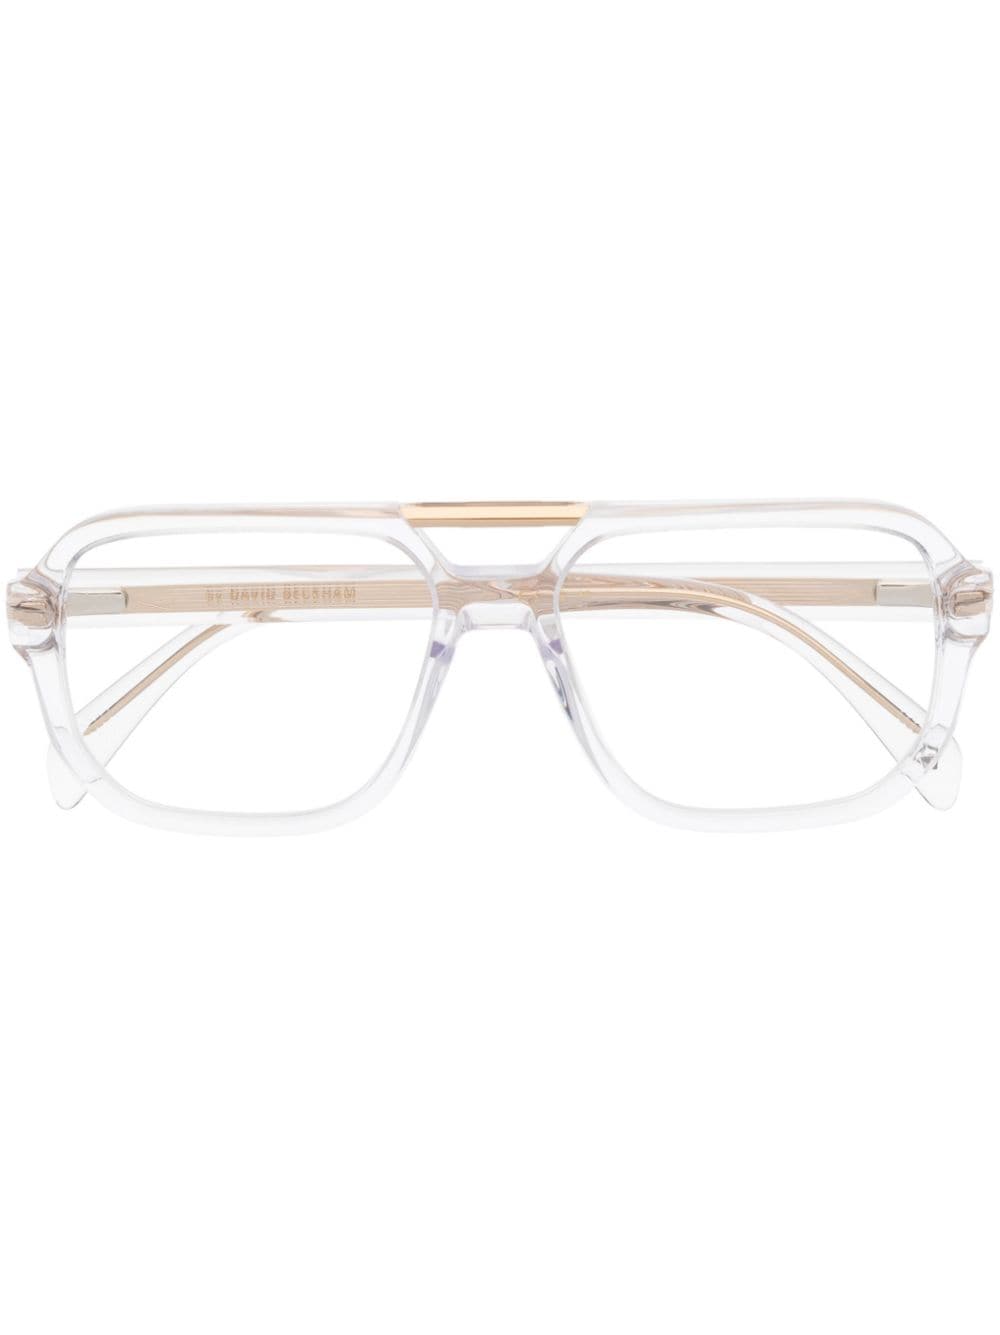 Eyewear By David Beckham Pilot-frame Glasses In Neutrals